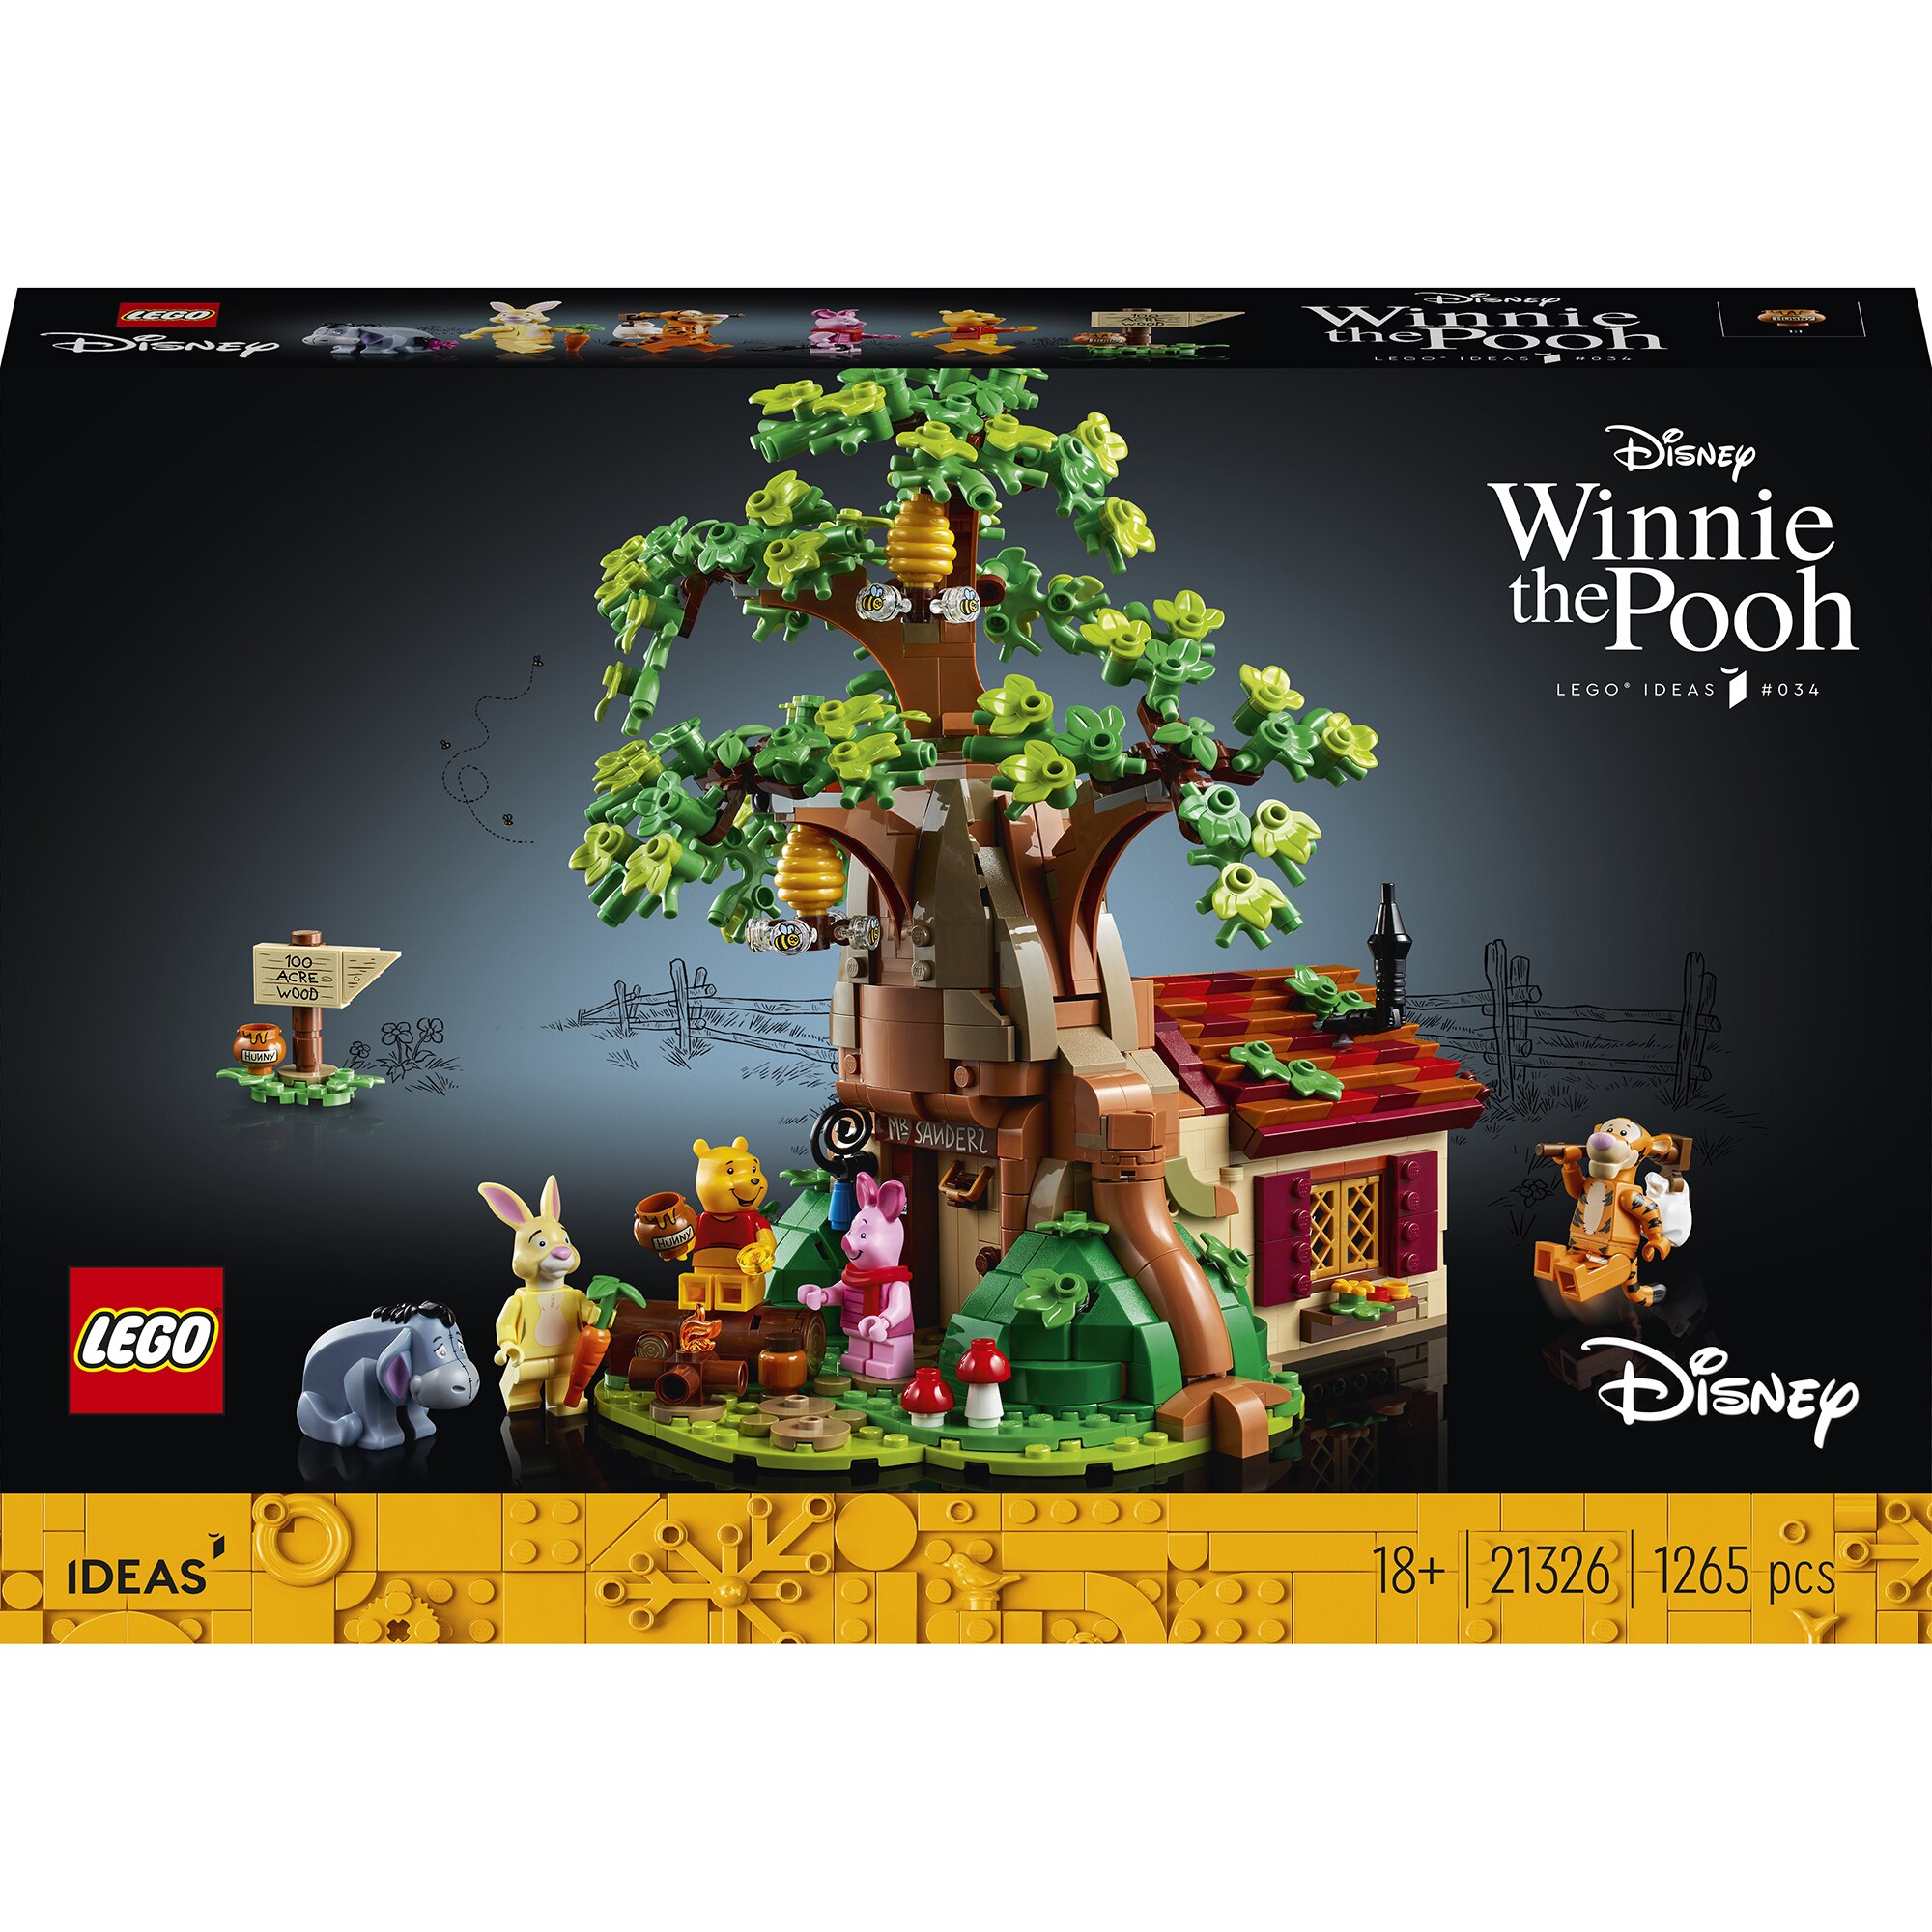 Fotografie LEGO Ideas - Winnie the Pooh 21326, 1265 piese